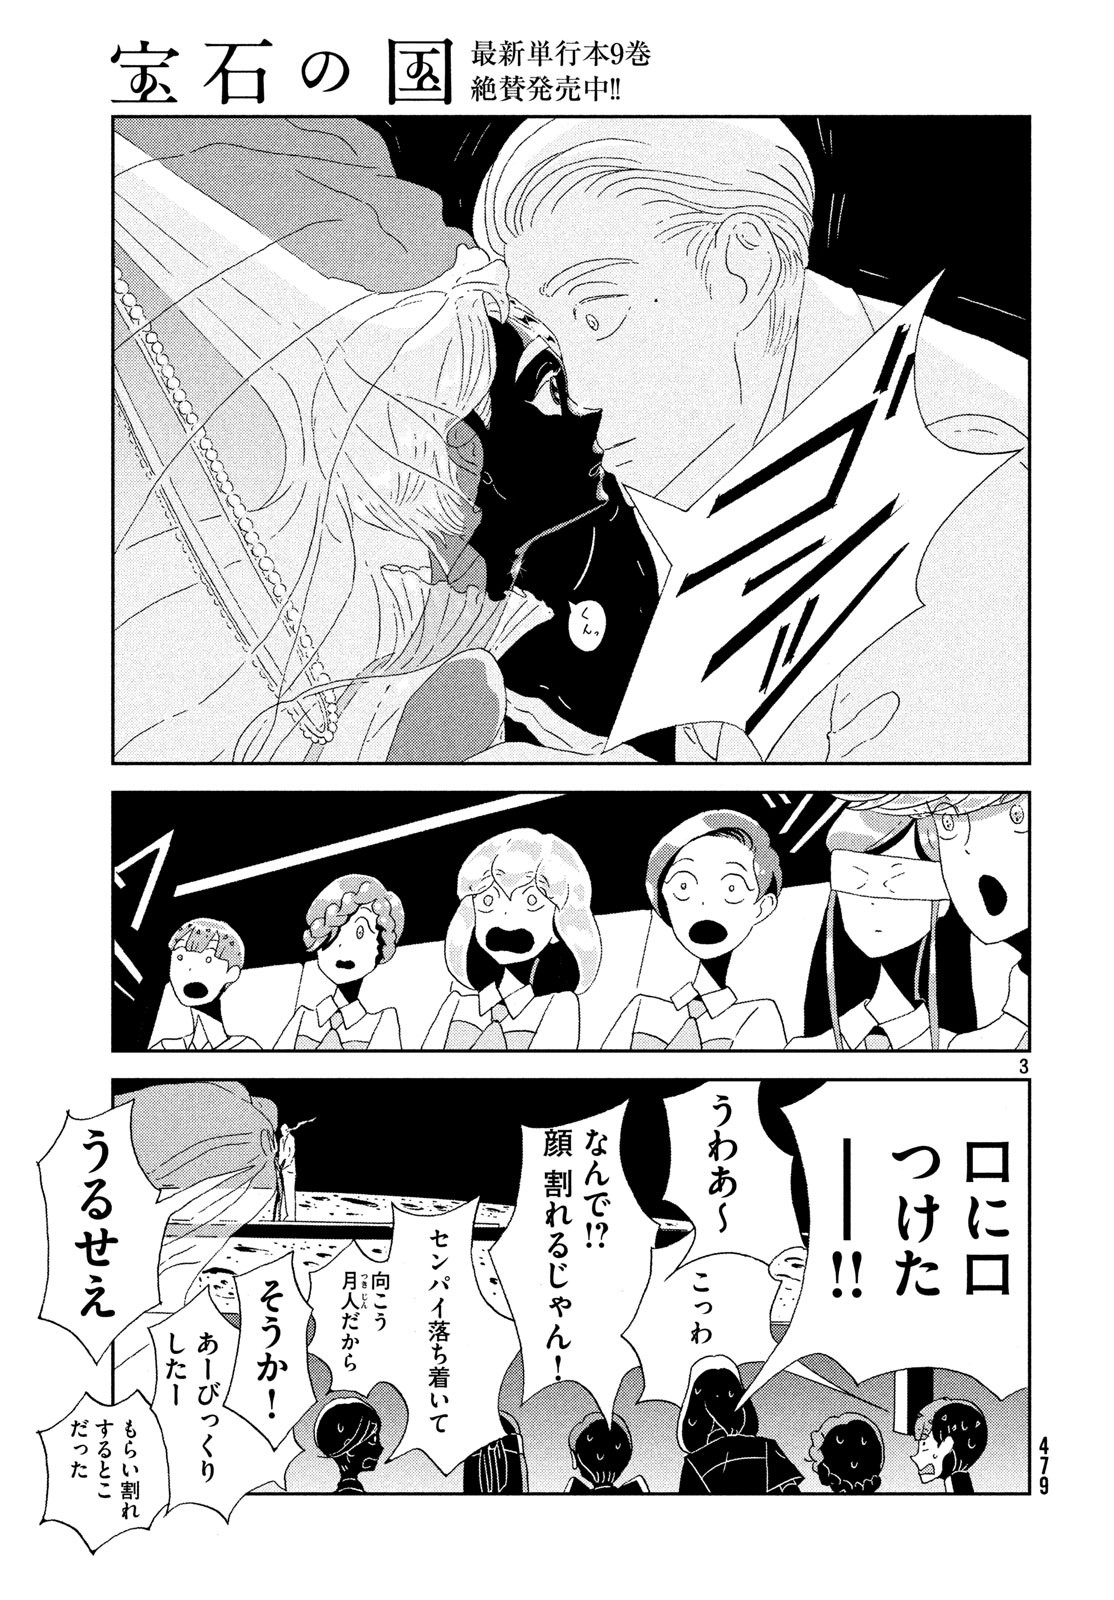 Houseki no Kuni - Chapter 75 - Page 3